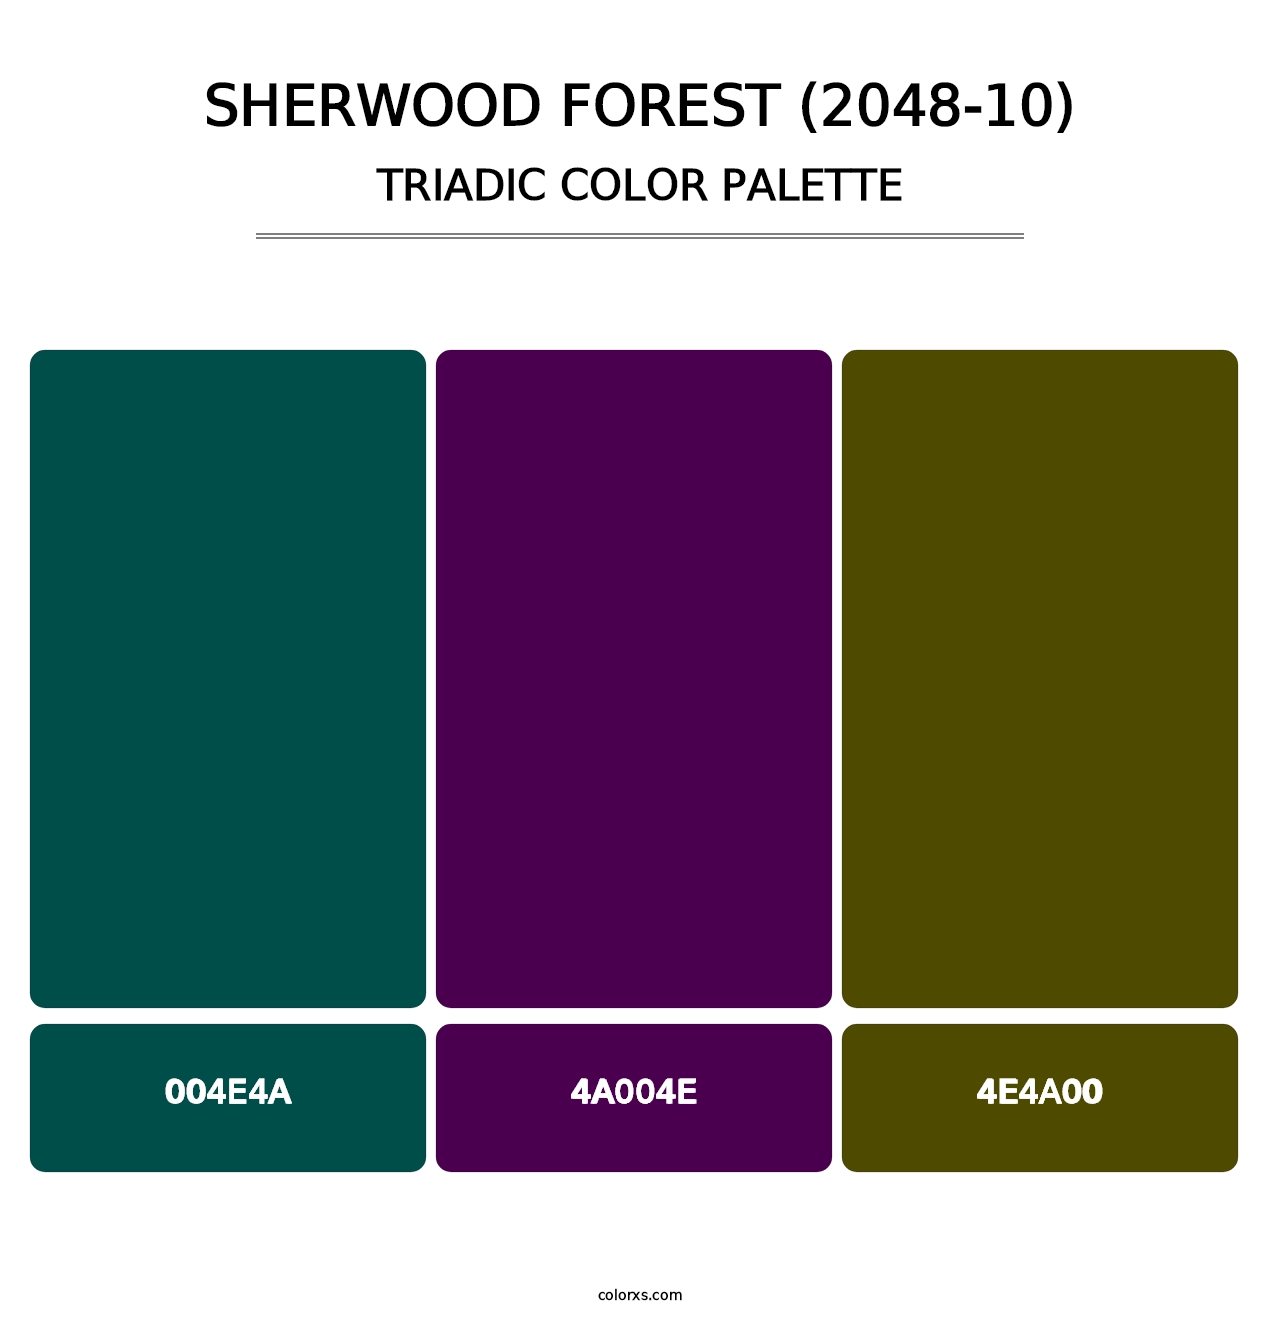 Sherwood Forest (2048-10) - Triadic Color Palette